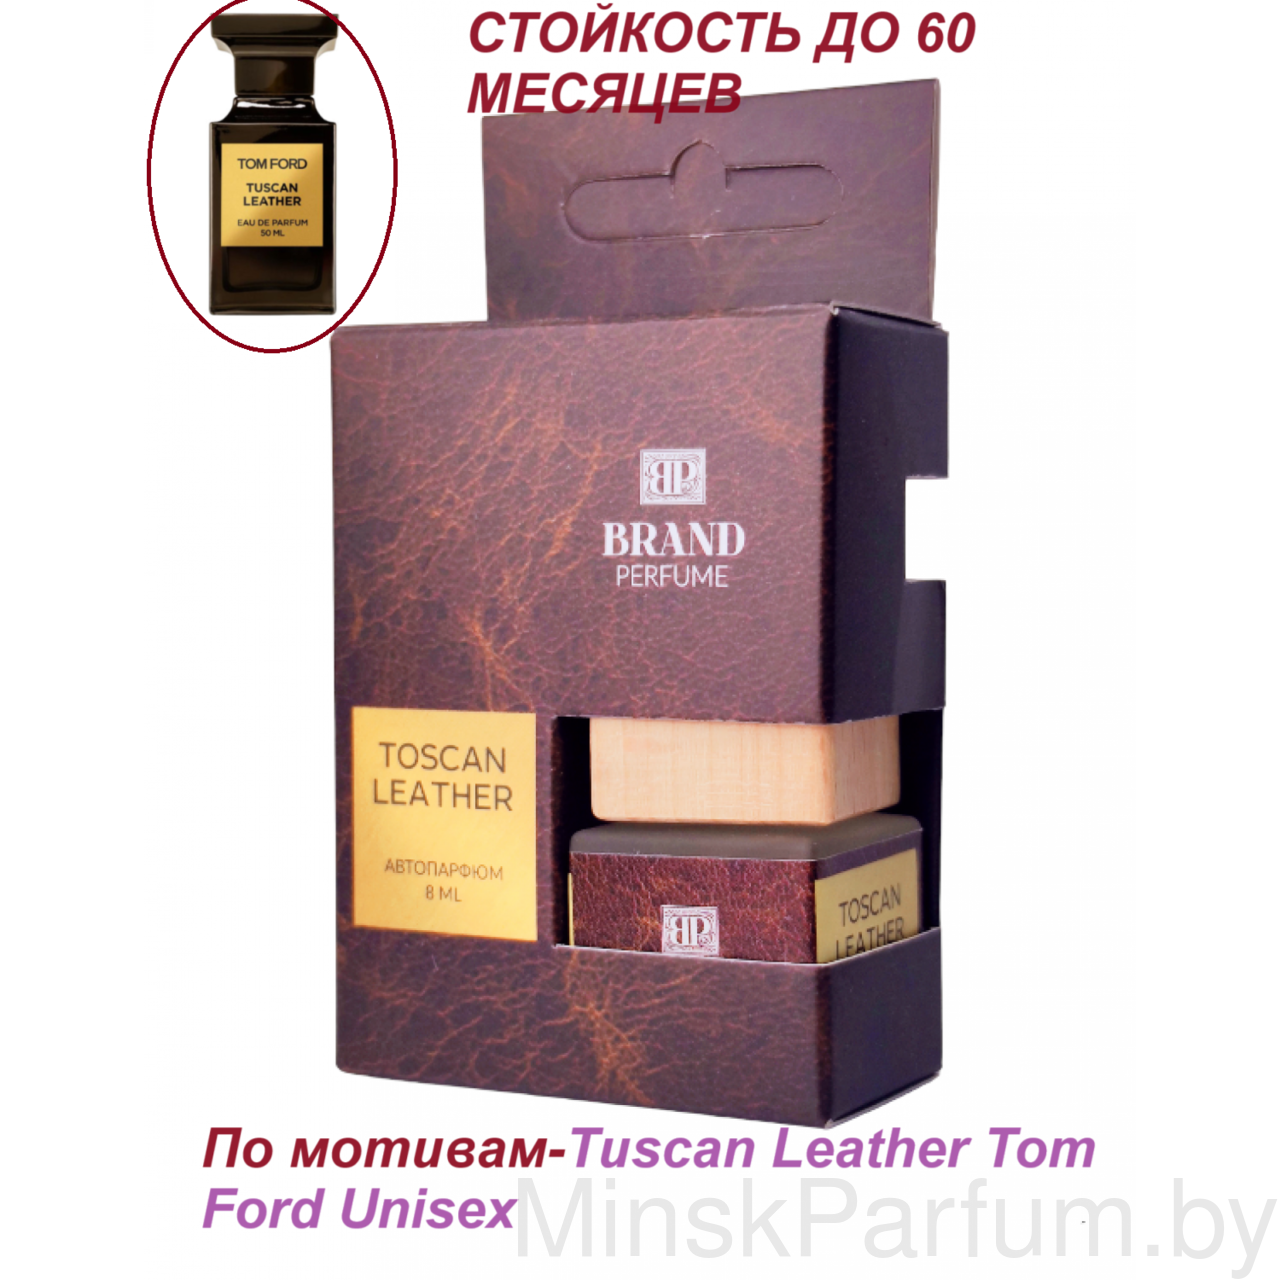 Автопарфюм Toscan Leather, 8 мл